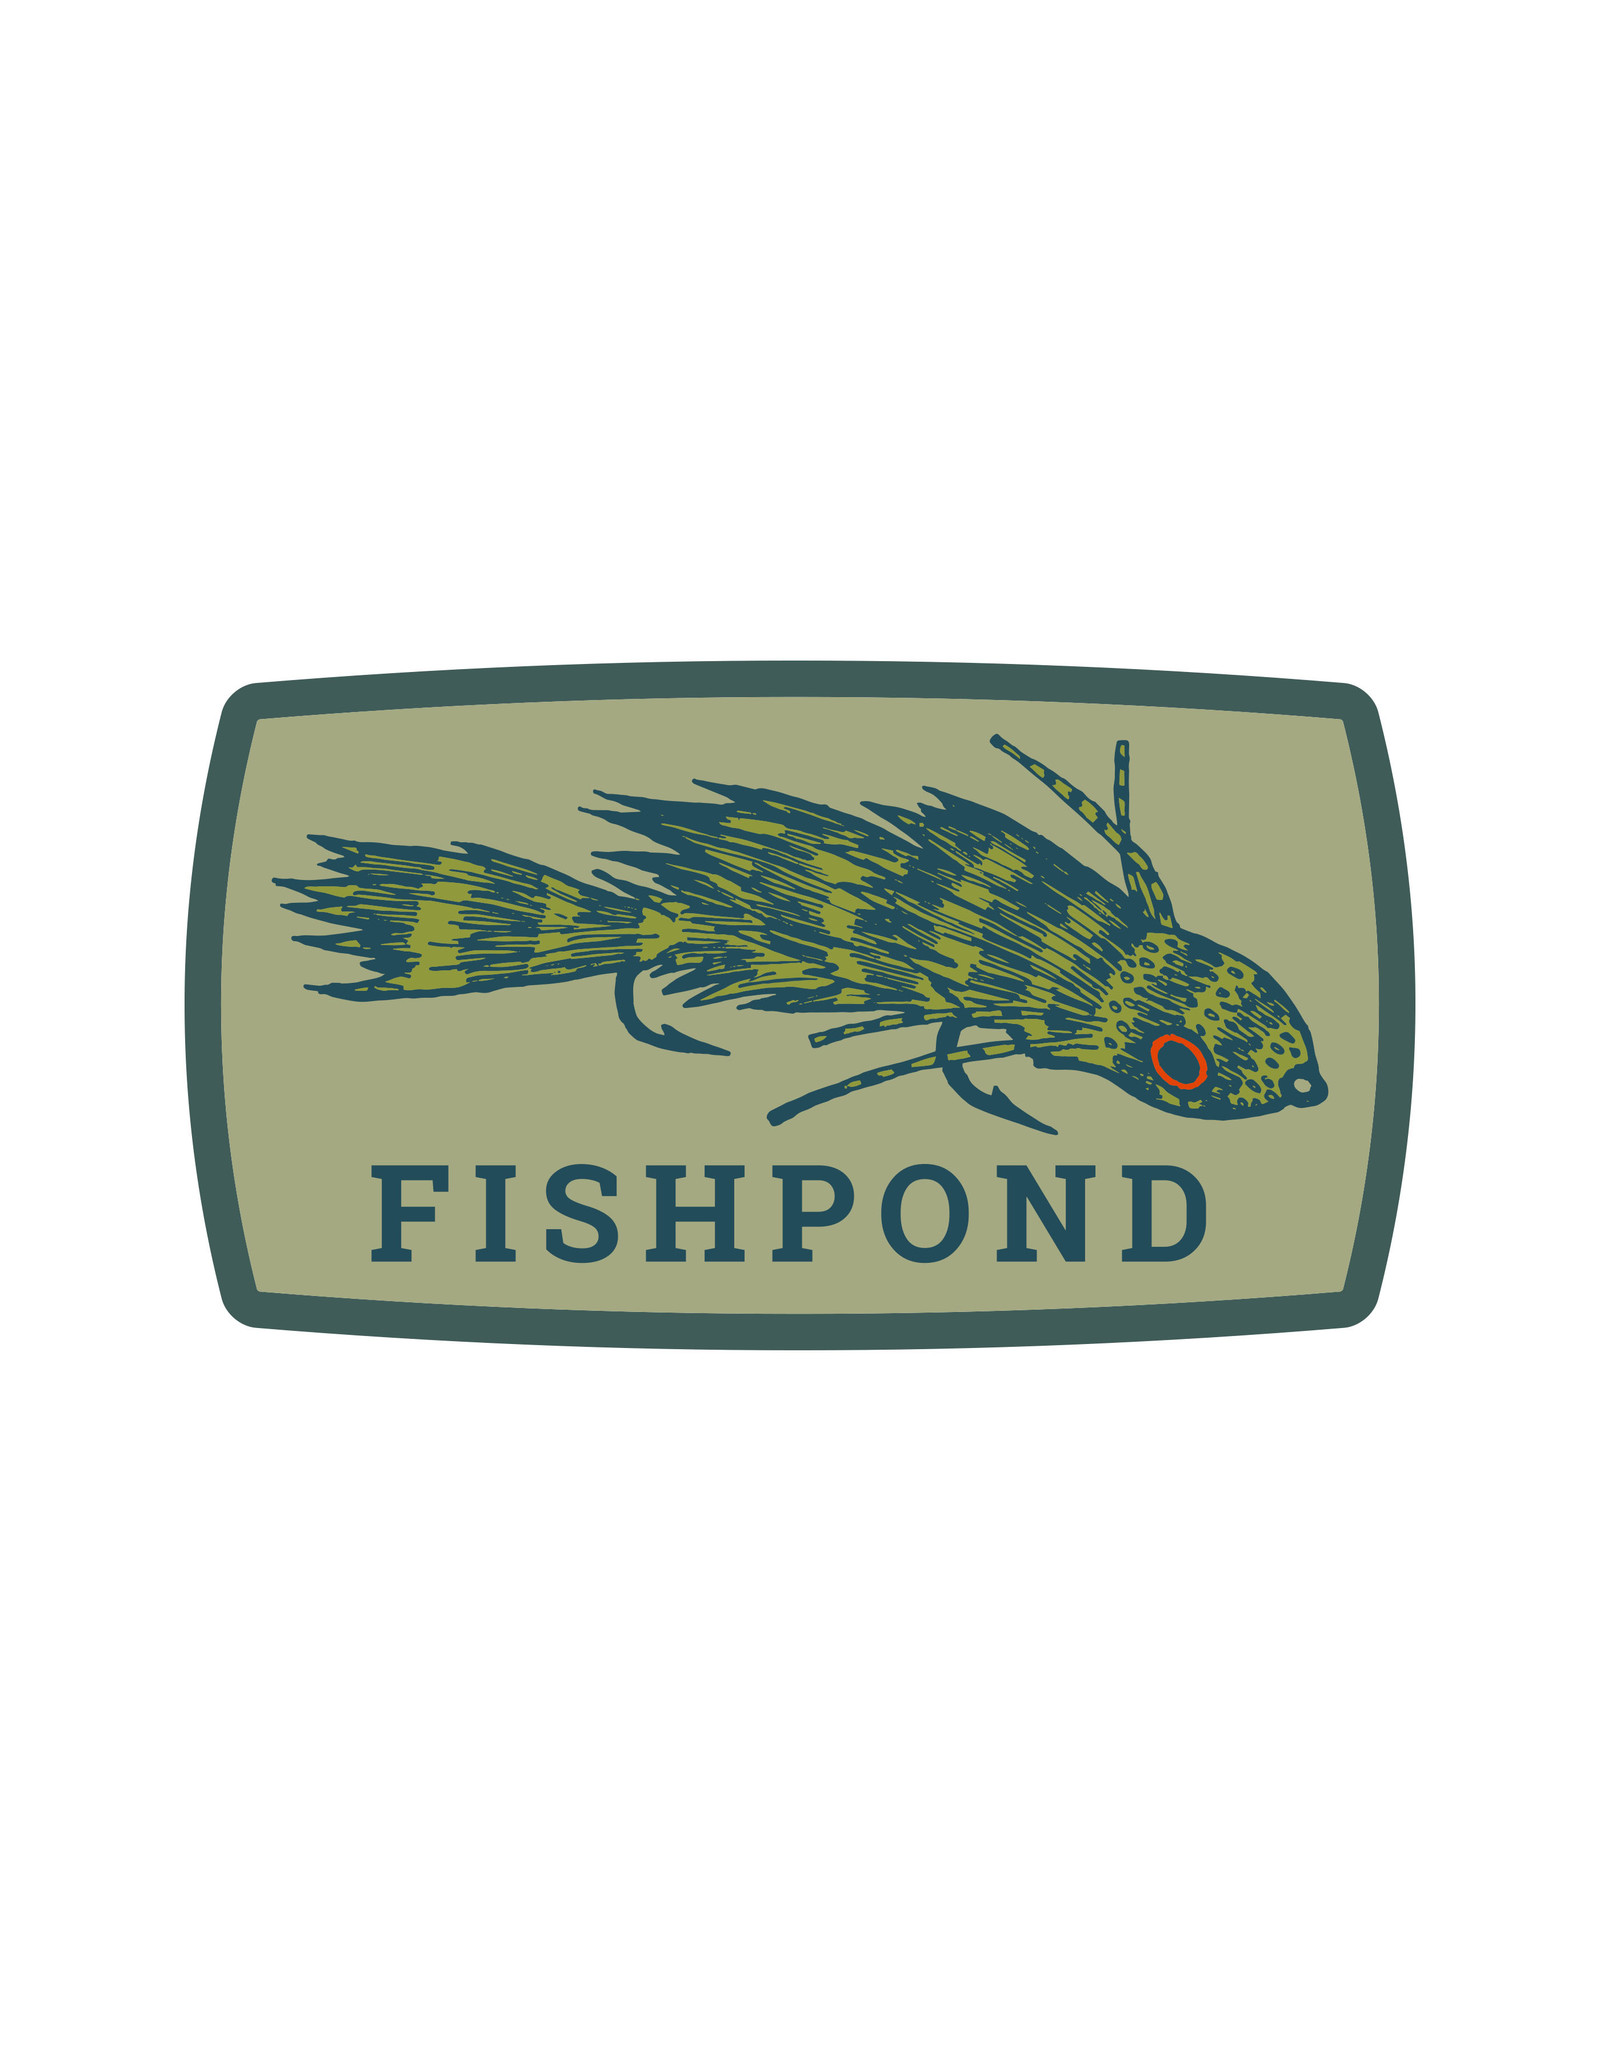 Fishpond Meathead Sticker 6"